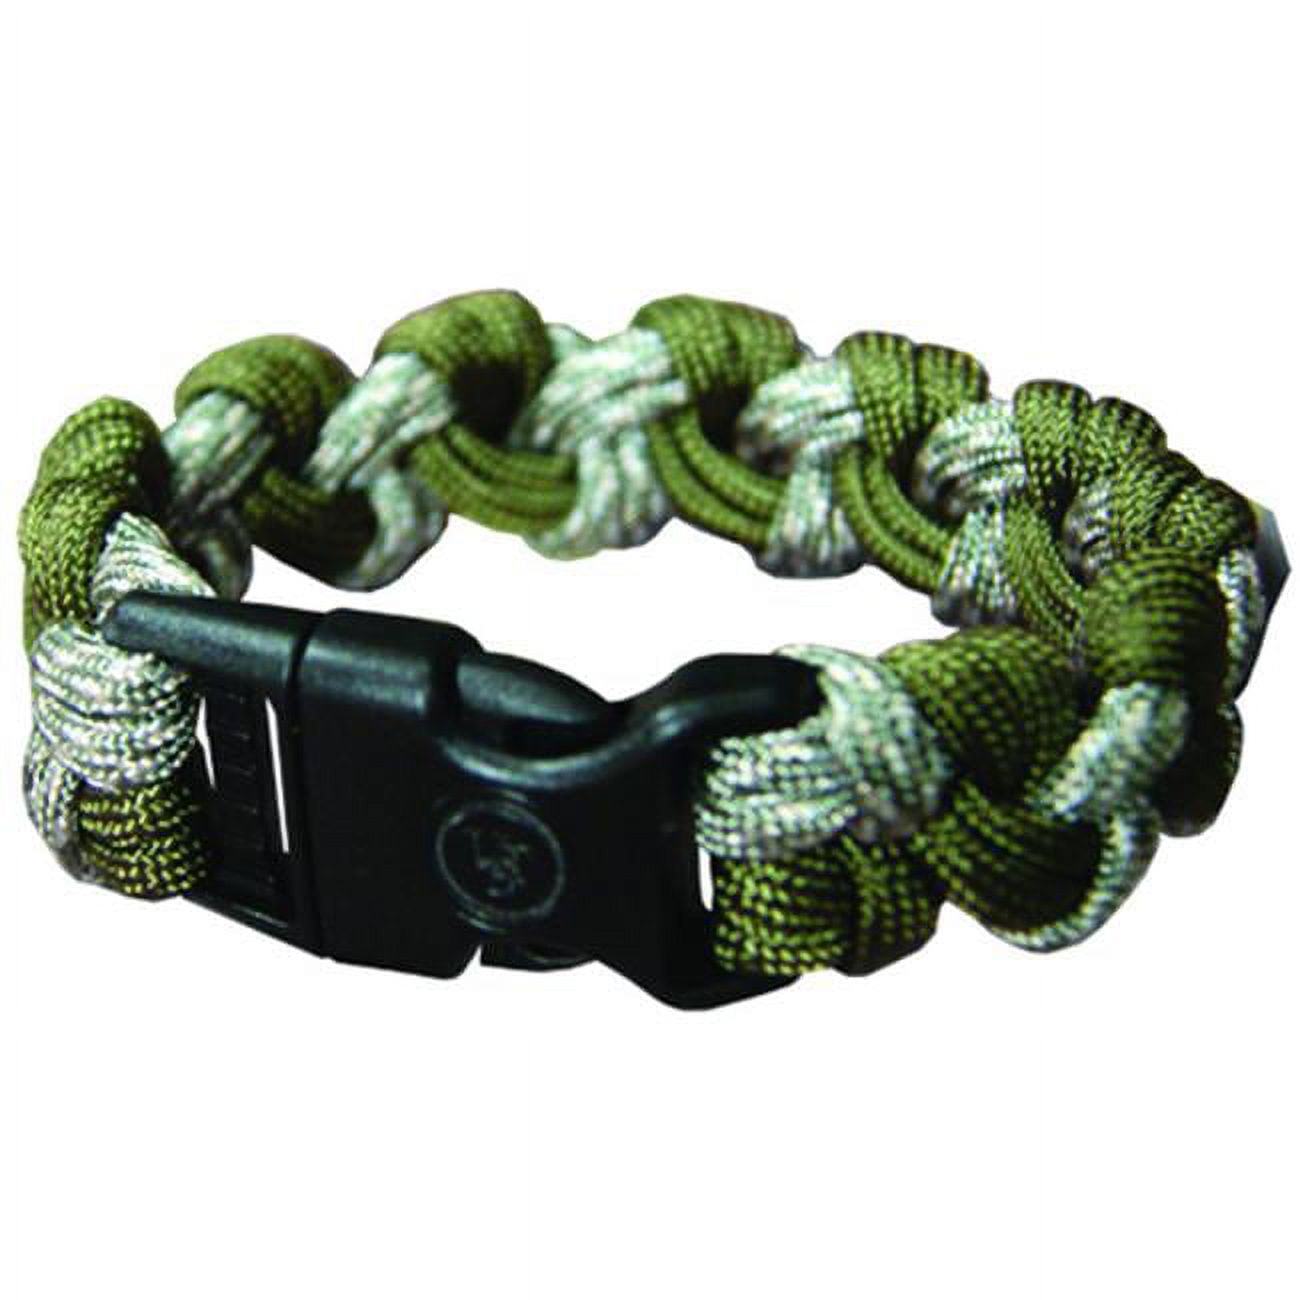 Amazon.com : Coghlan's 550-Pound Nylon Paracord Bracelet : Sports & Outdoors